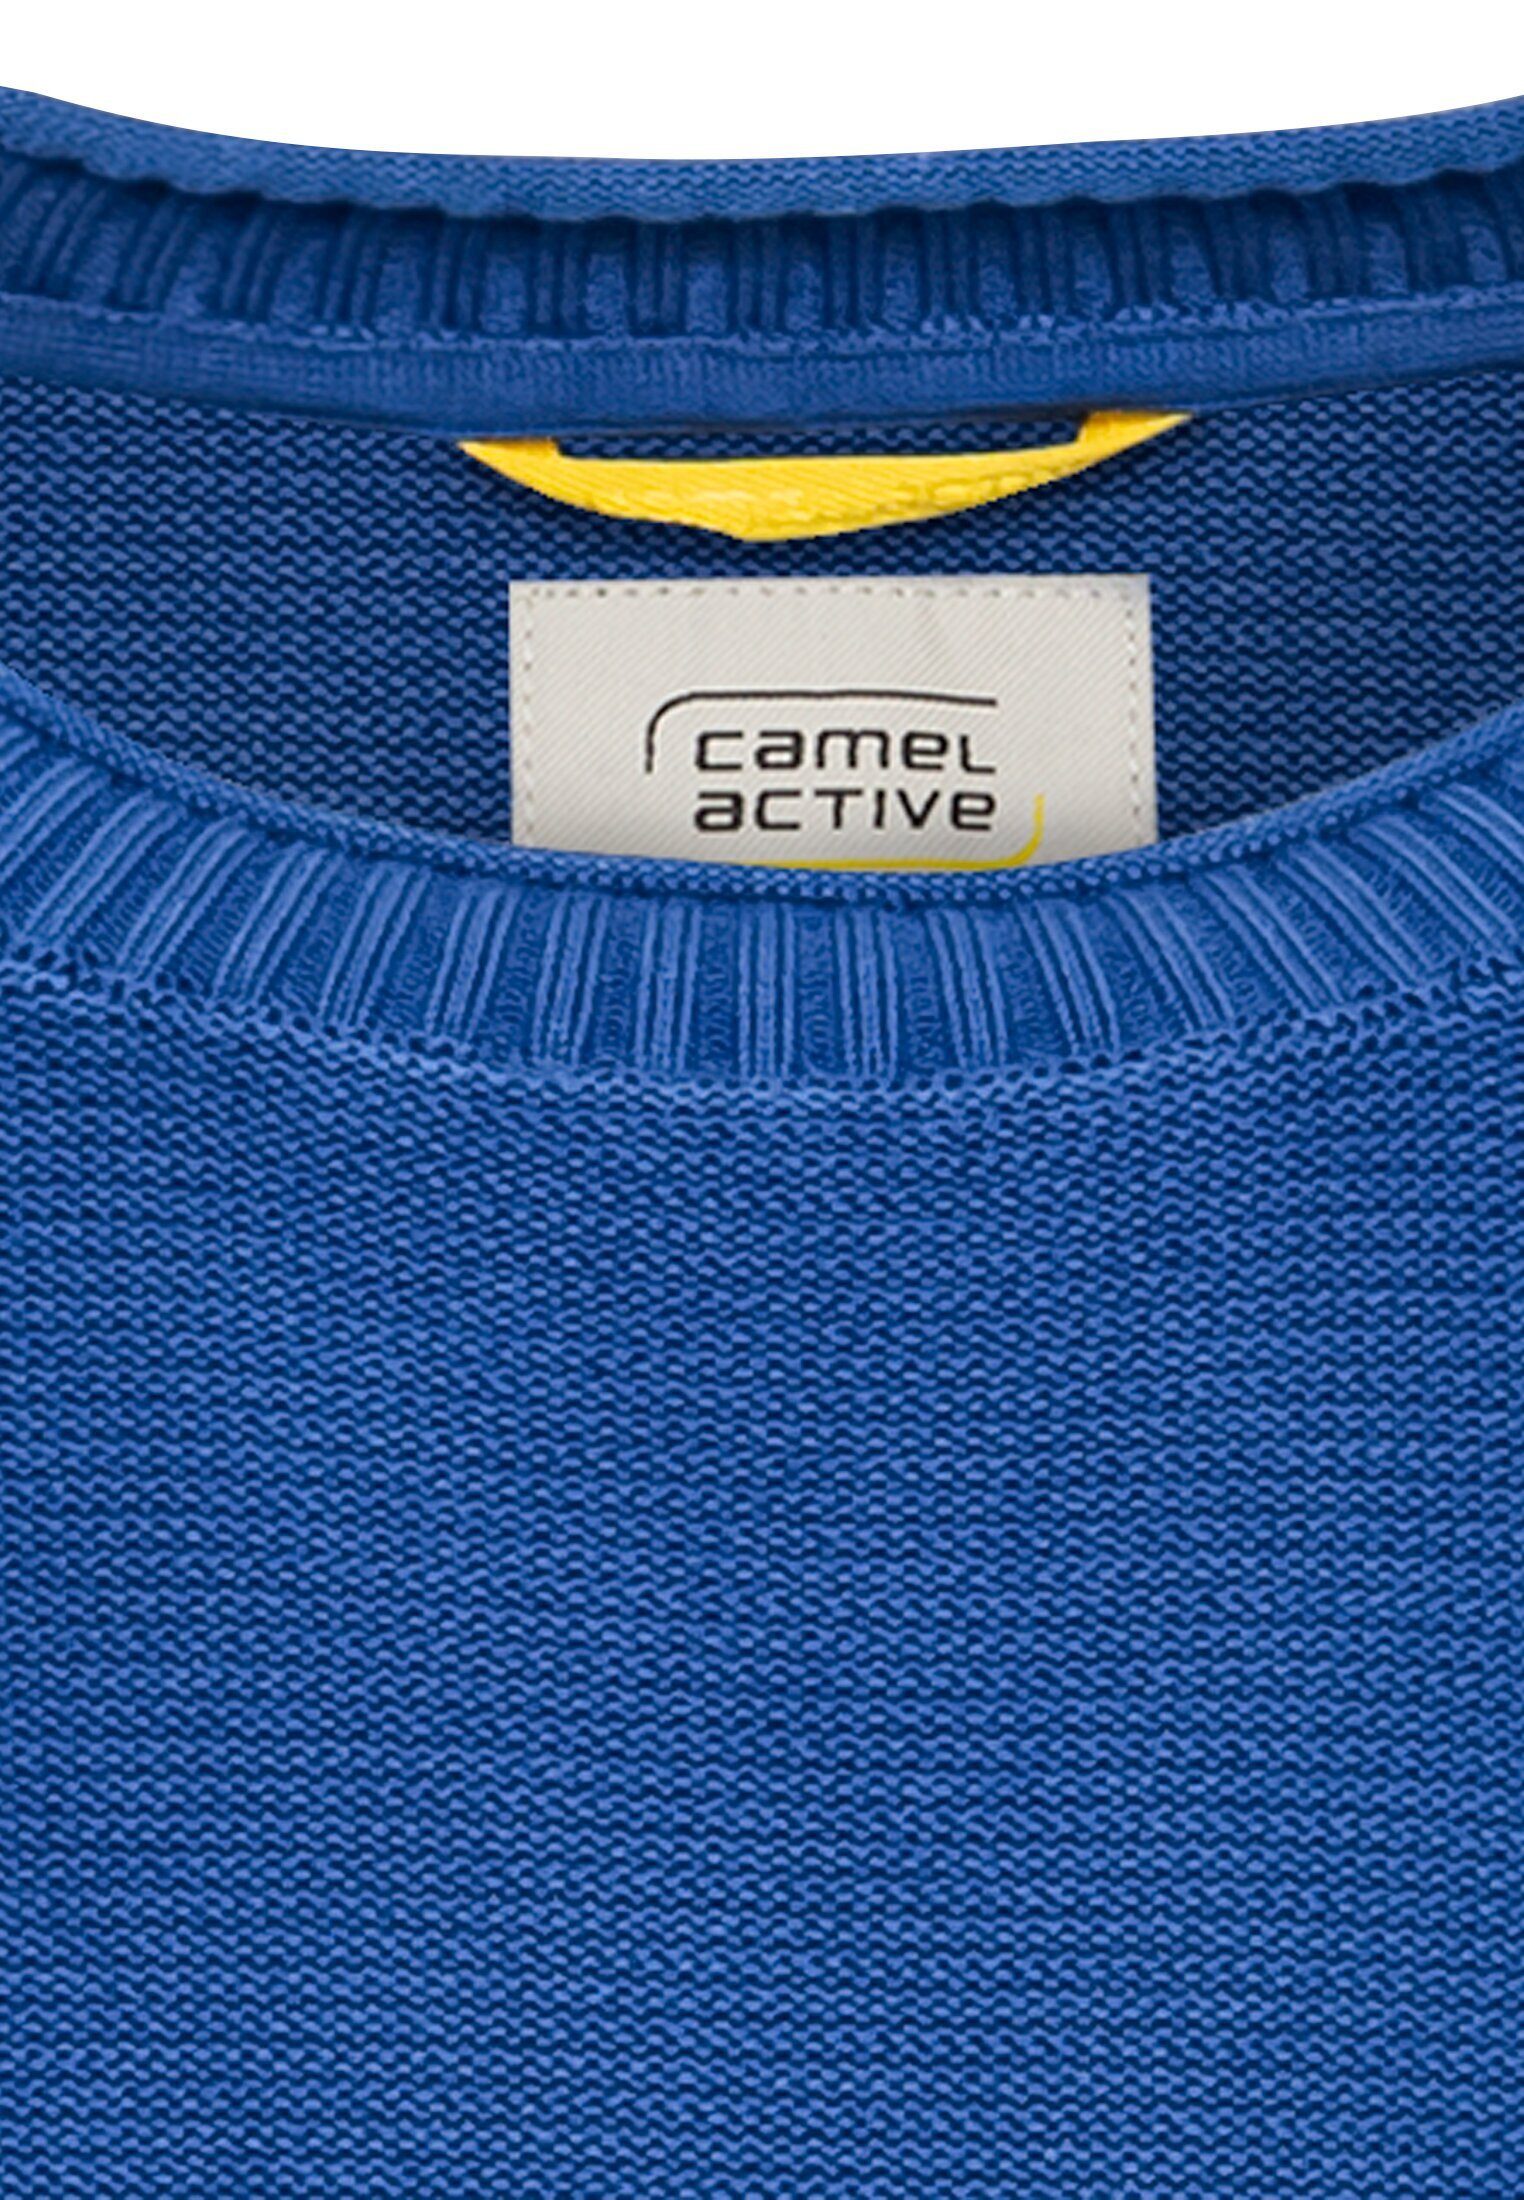 camel active Strickpullover Organic aus Cotton Blau Leder-Brandlabel